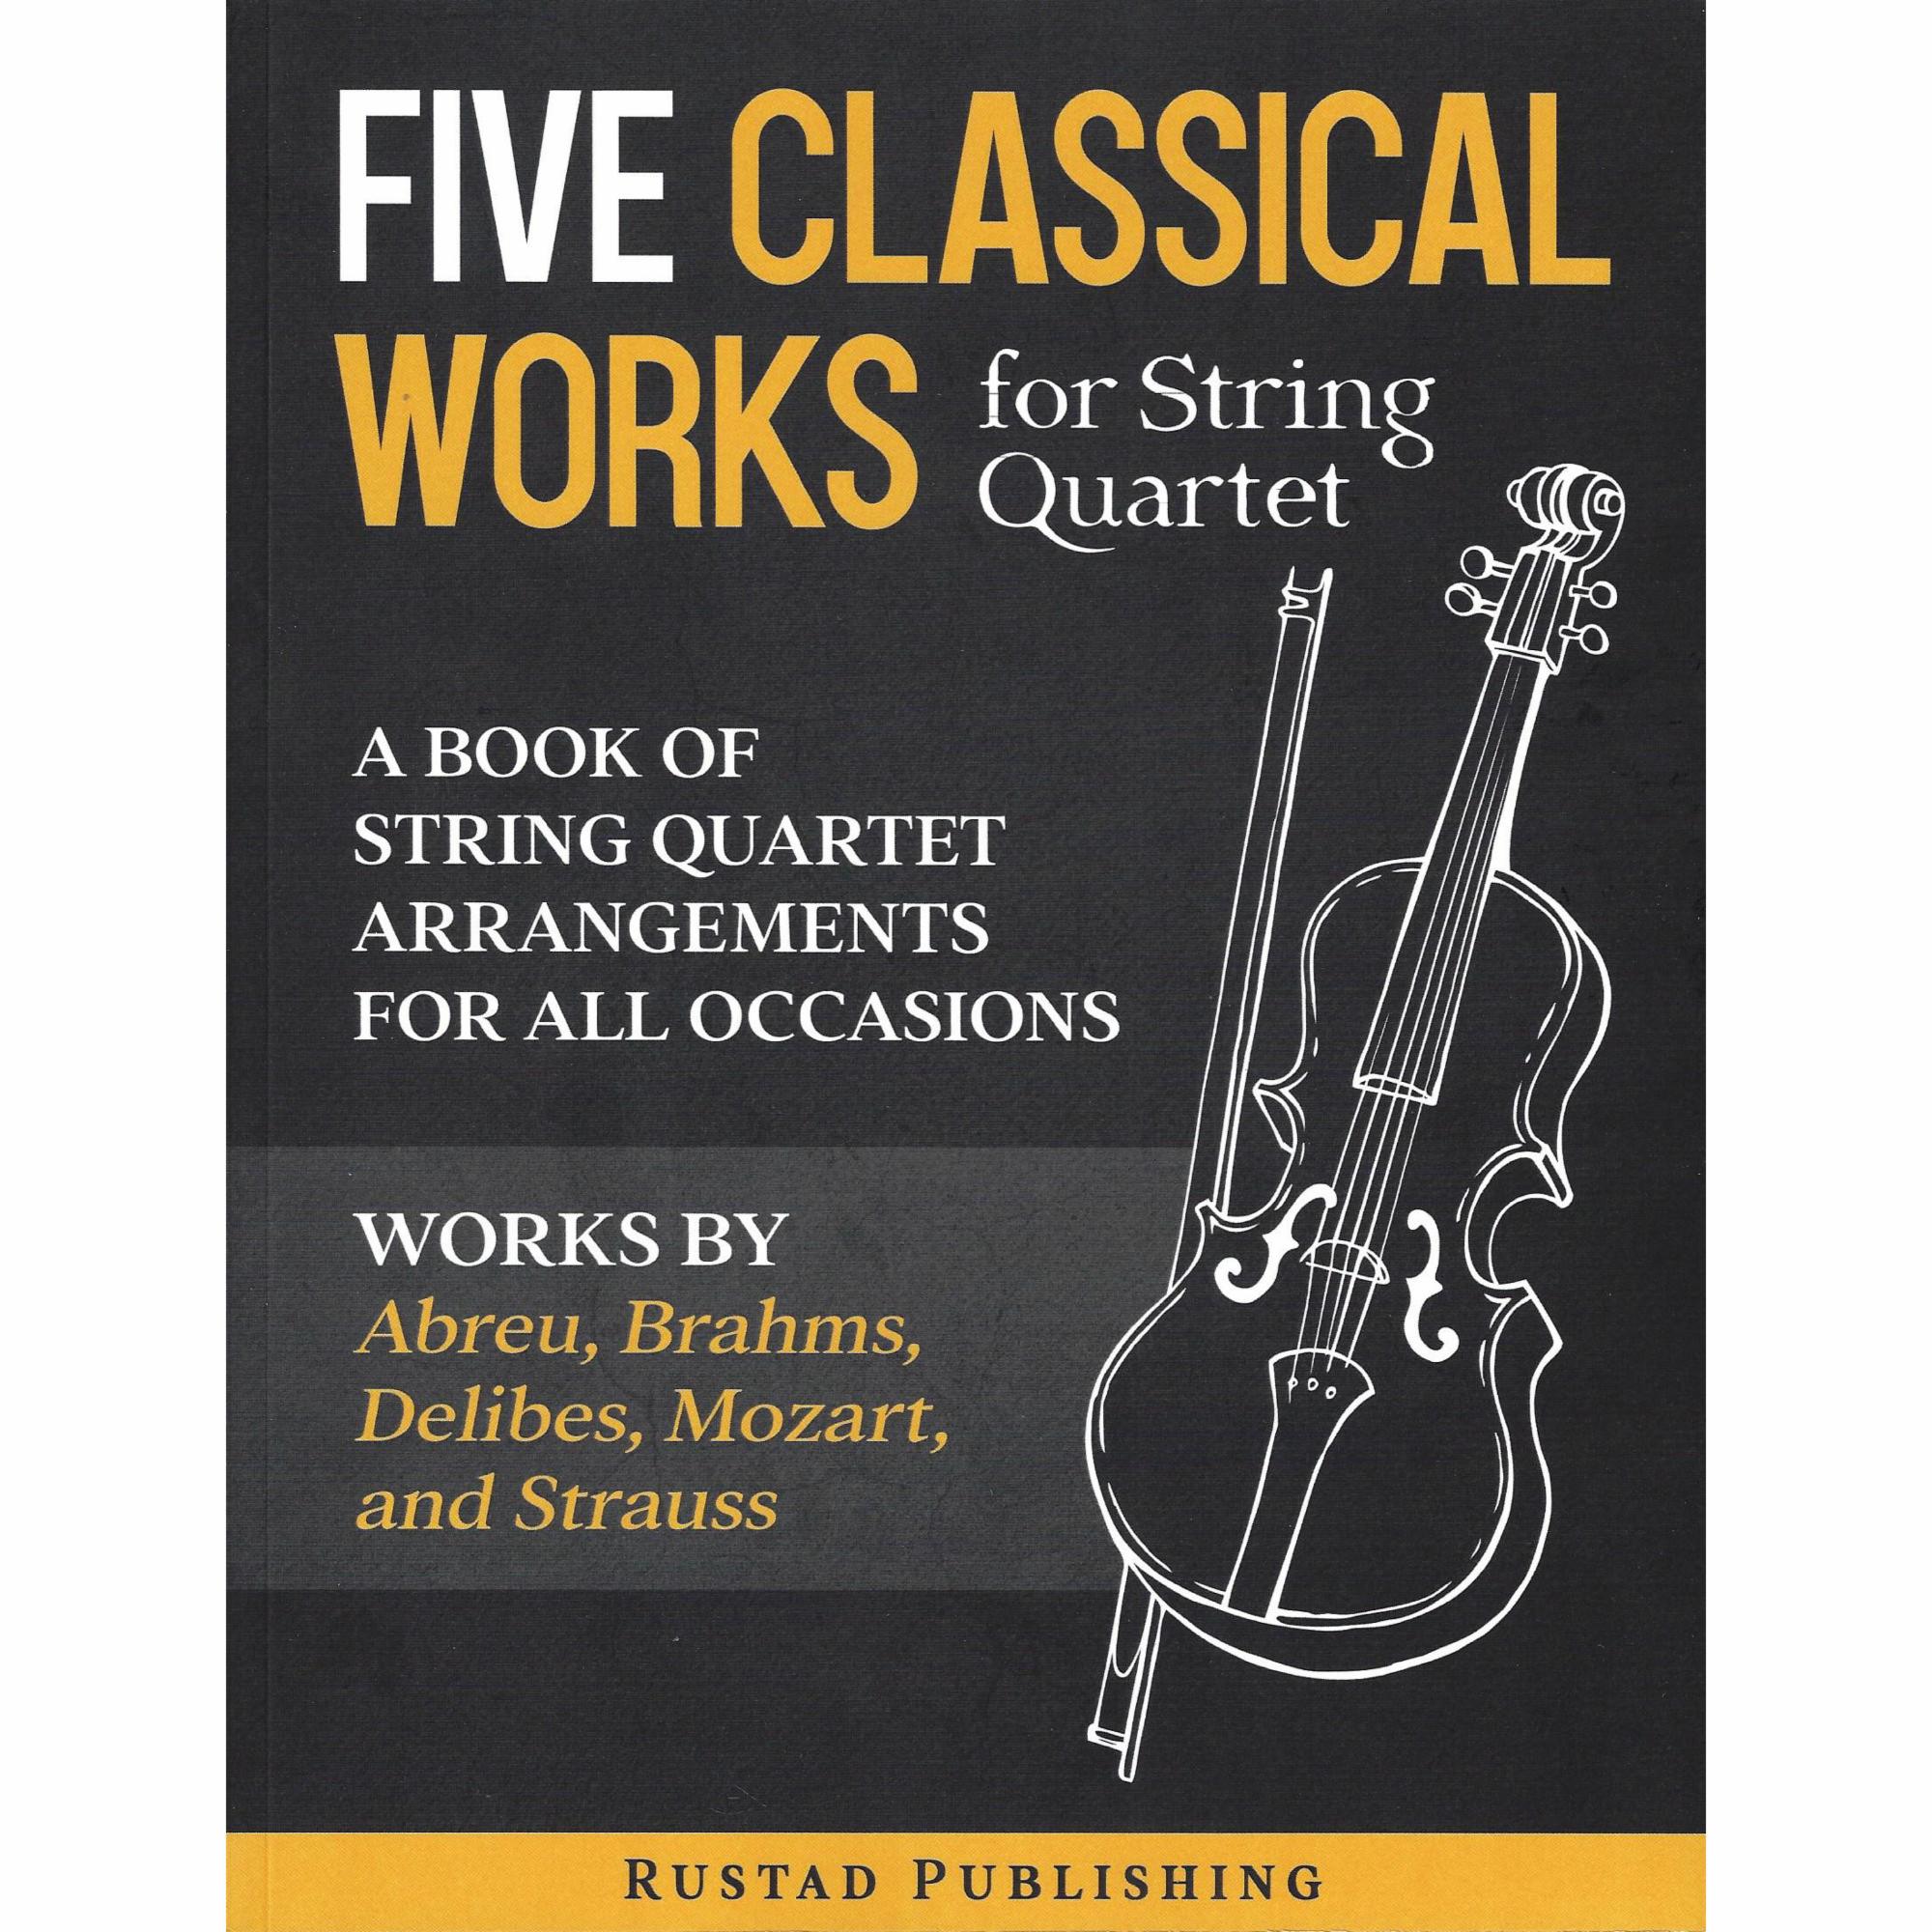 Five Classical Works for String Quartet